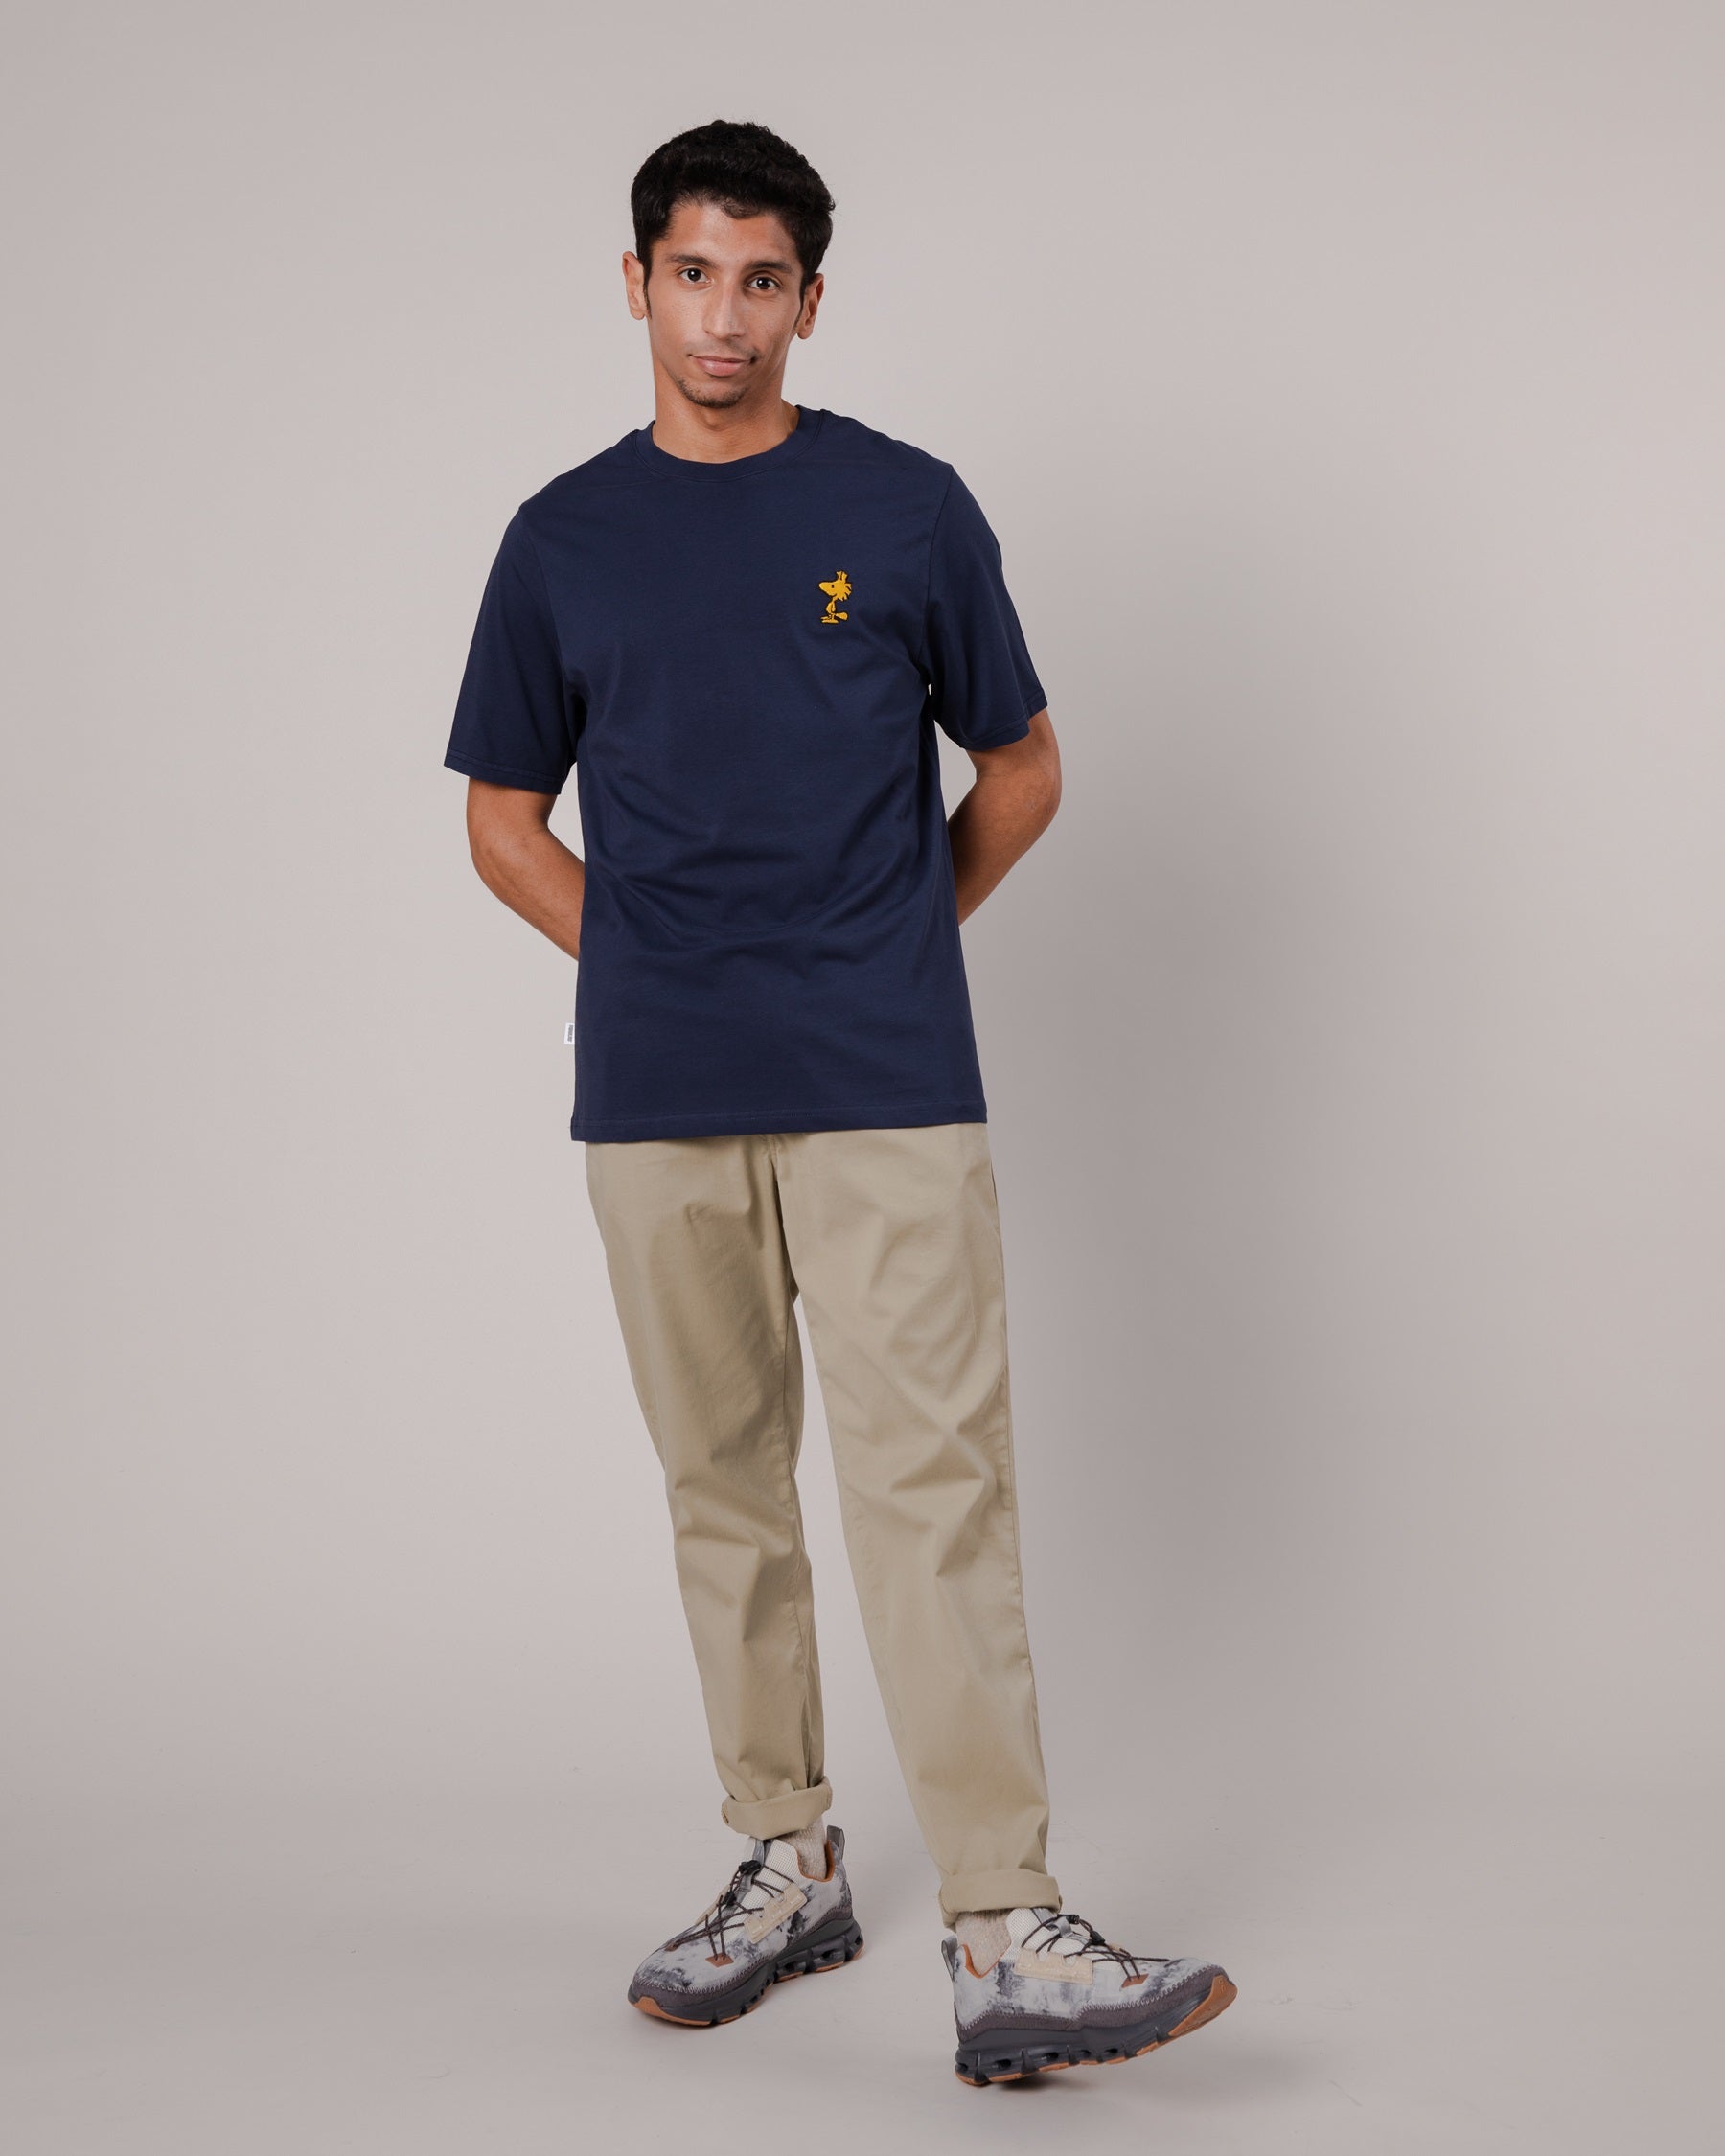 Men's navy Peanuts T-Shirt 100% cotton